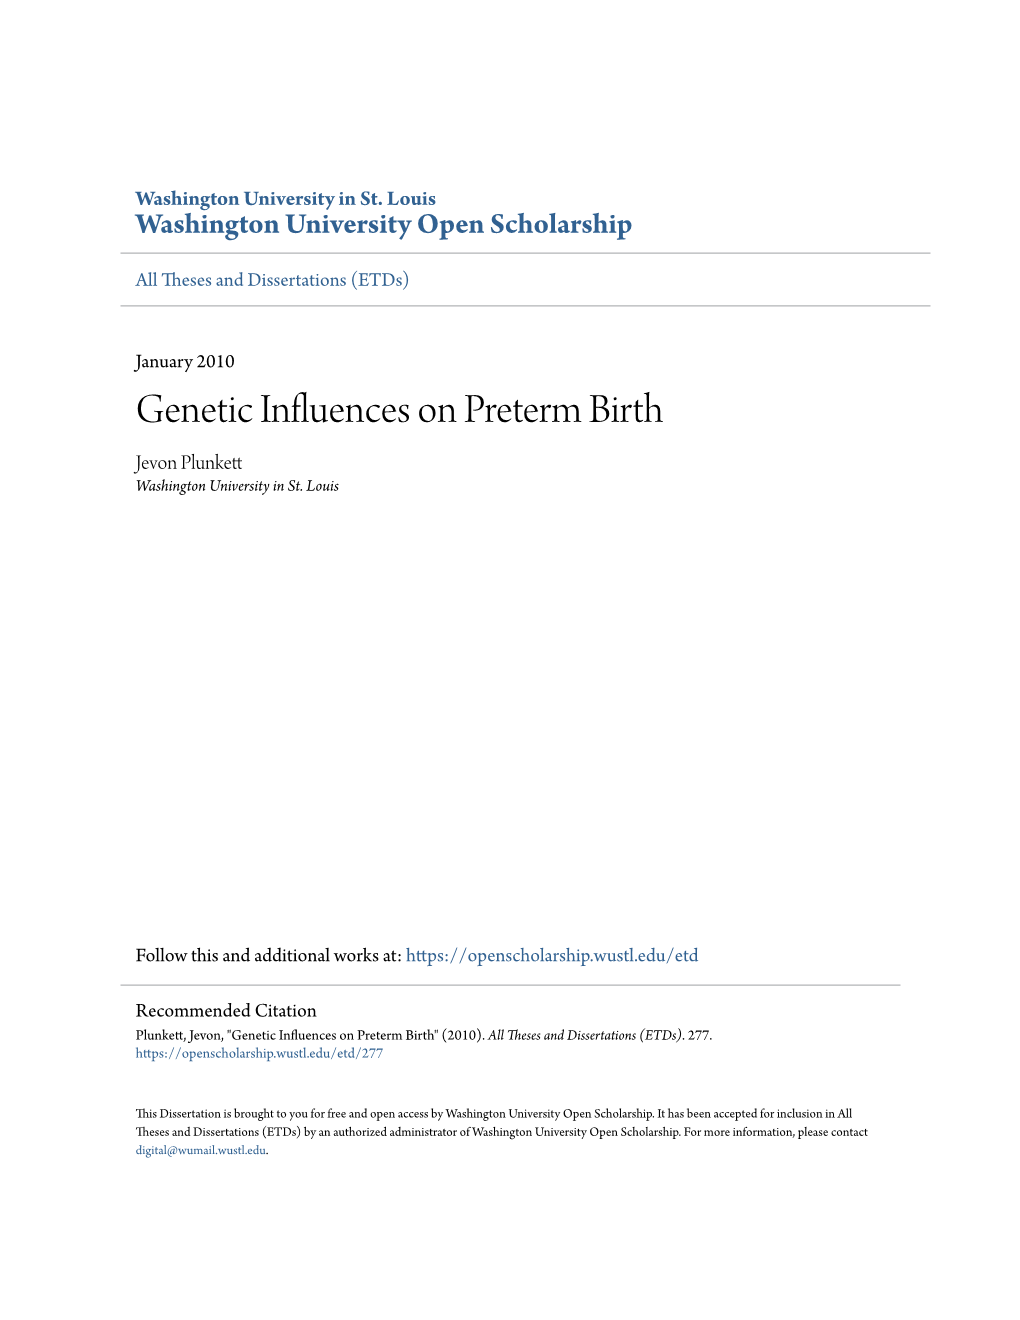 Genetic Influences on Preterm Birth Jevon Plunkett Washington University in St